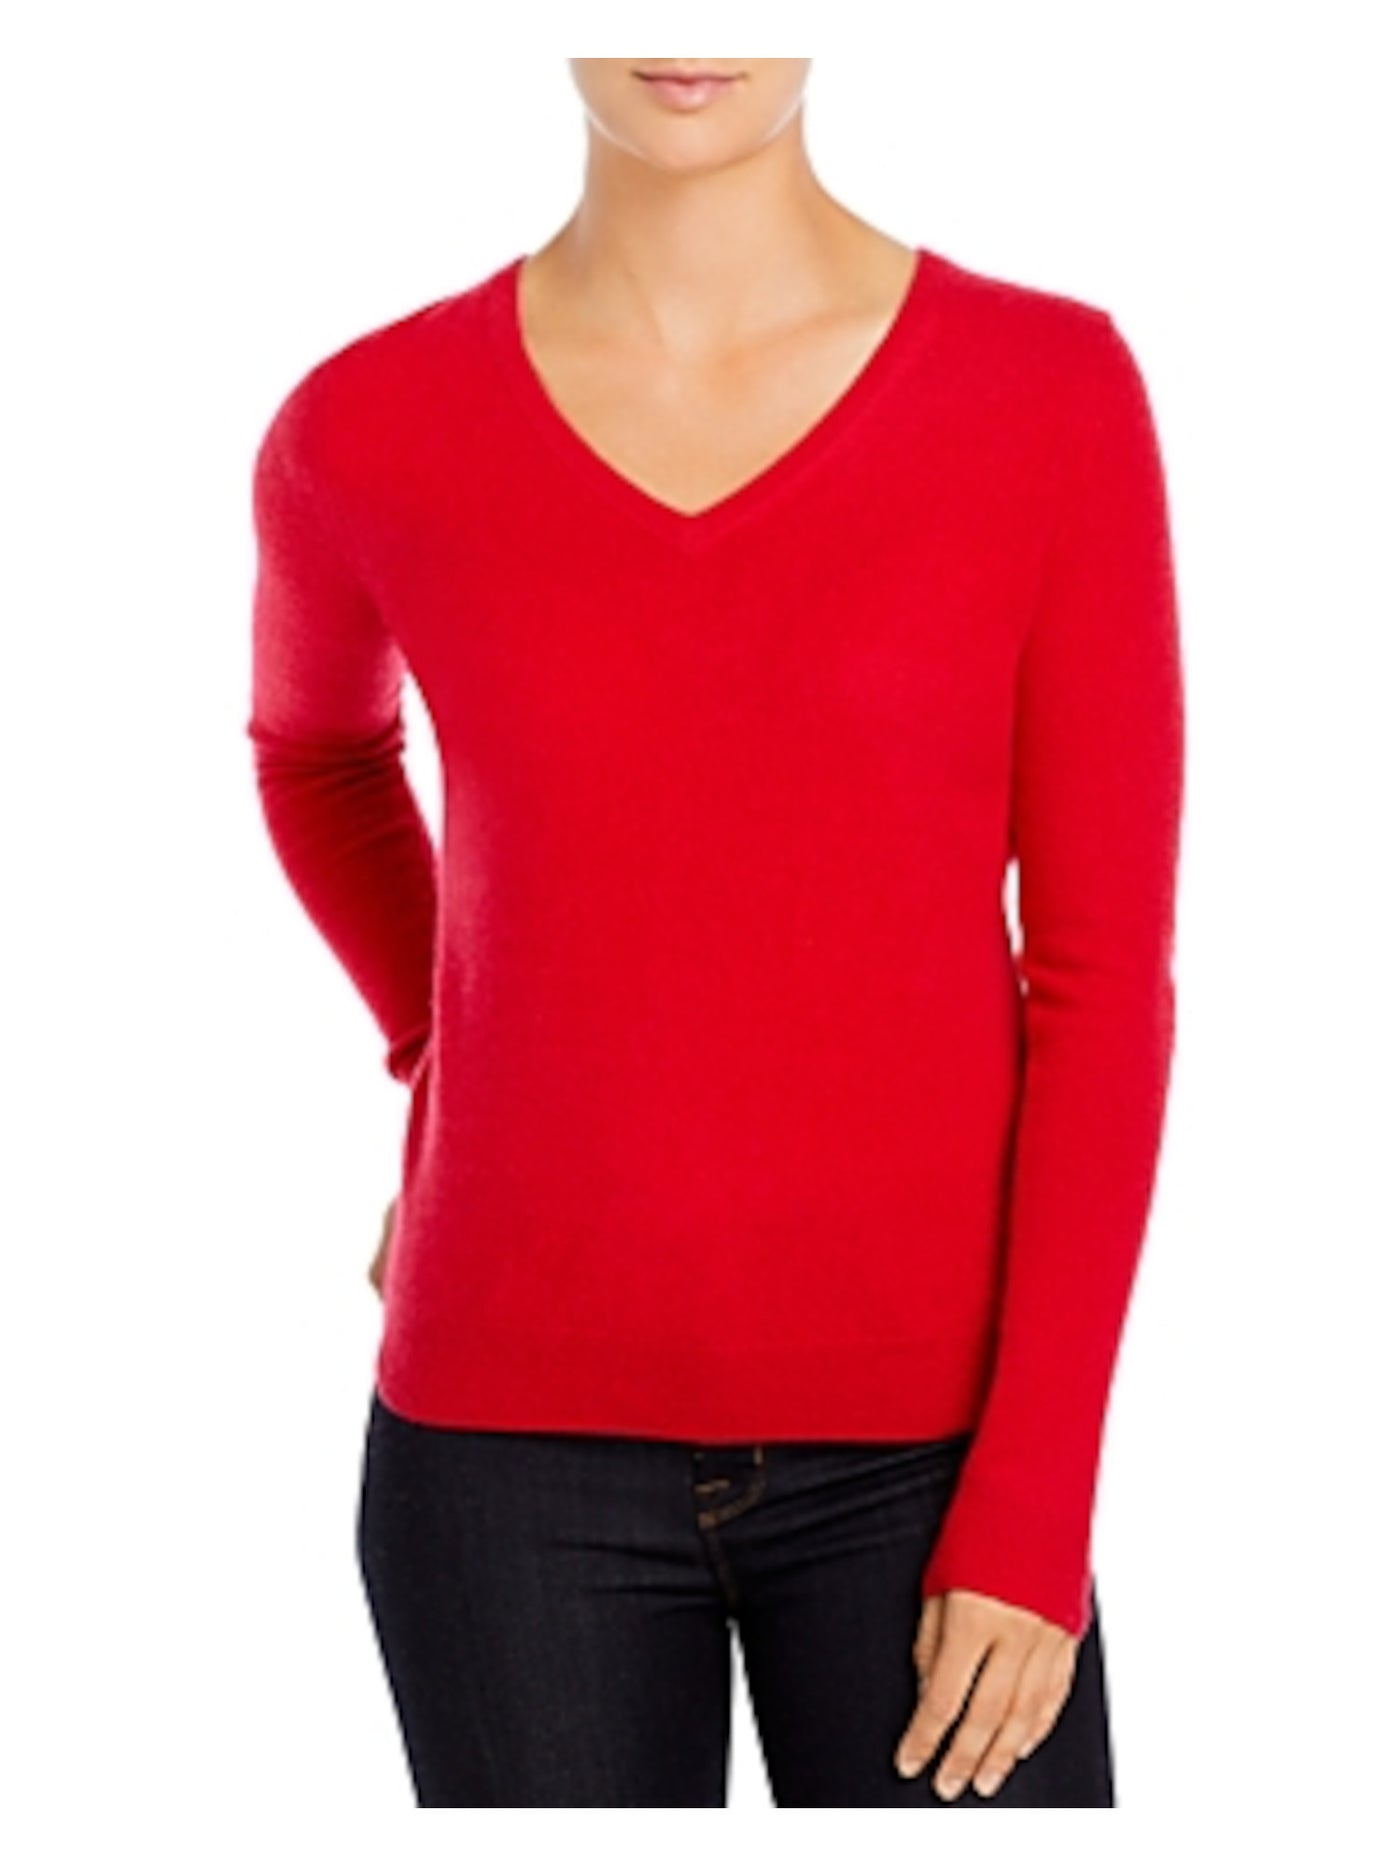 Designer Brand Womens Red Cashmere Long Sleeve V Neck Sweater S